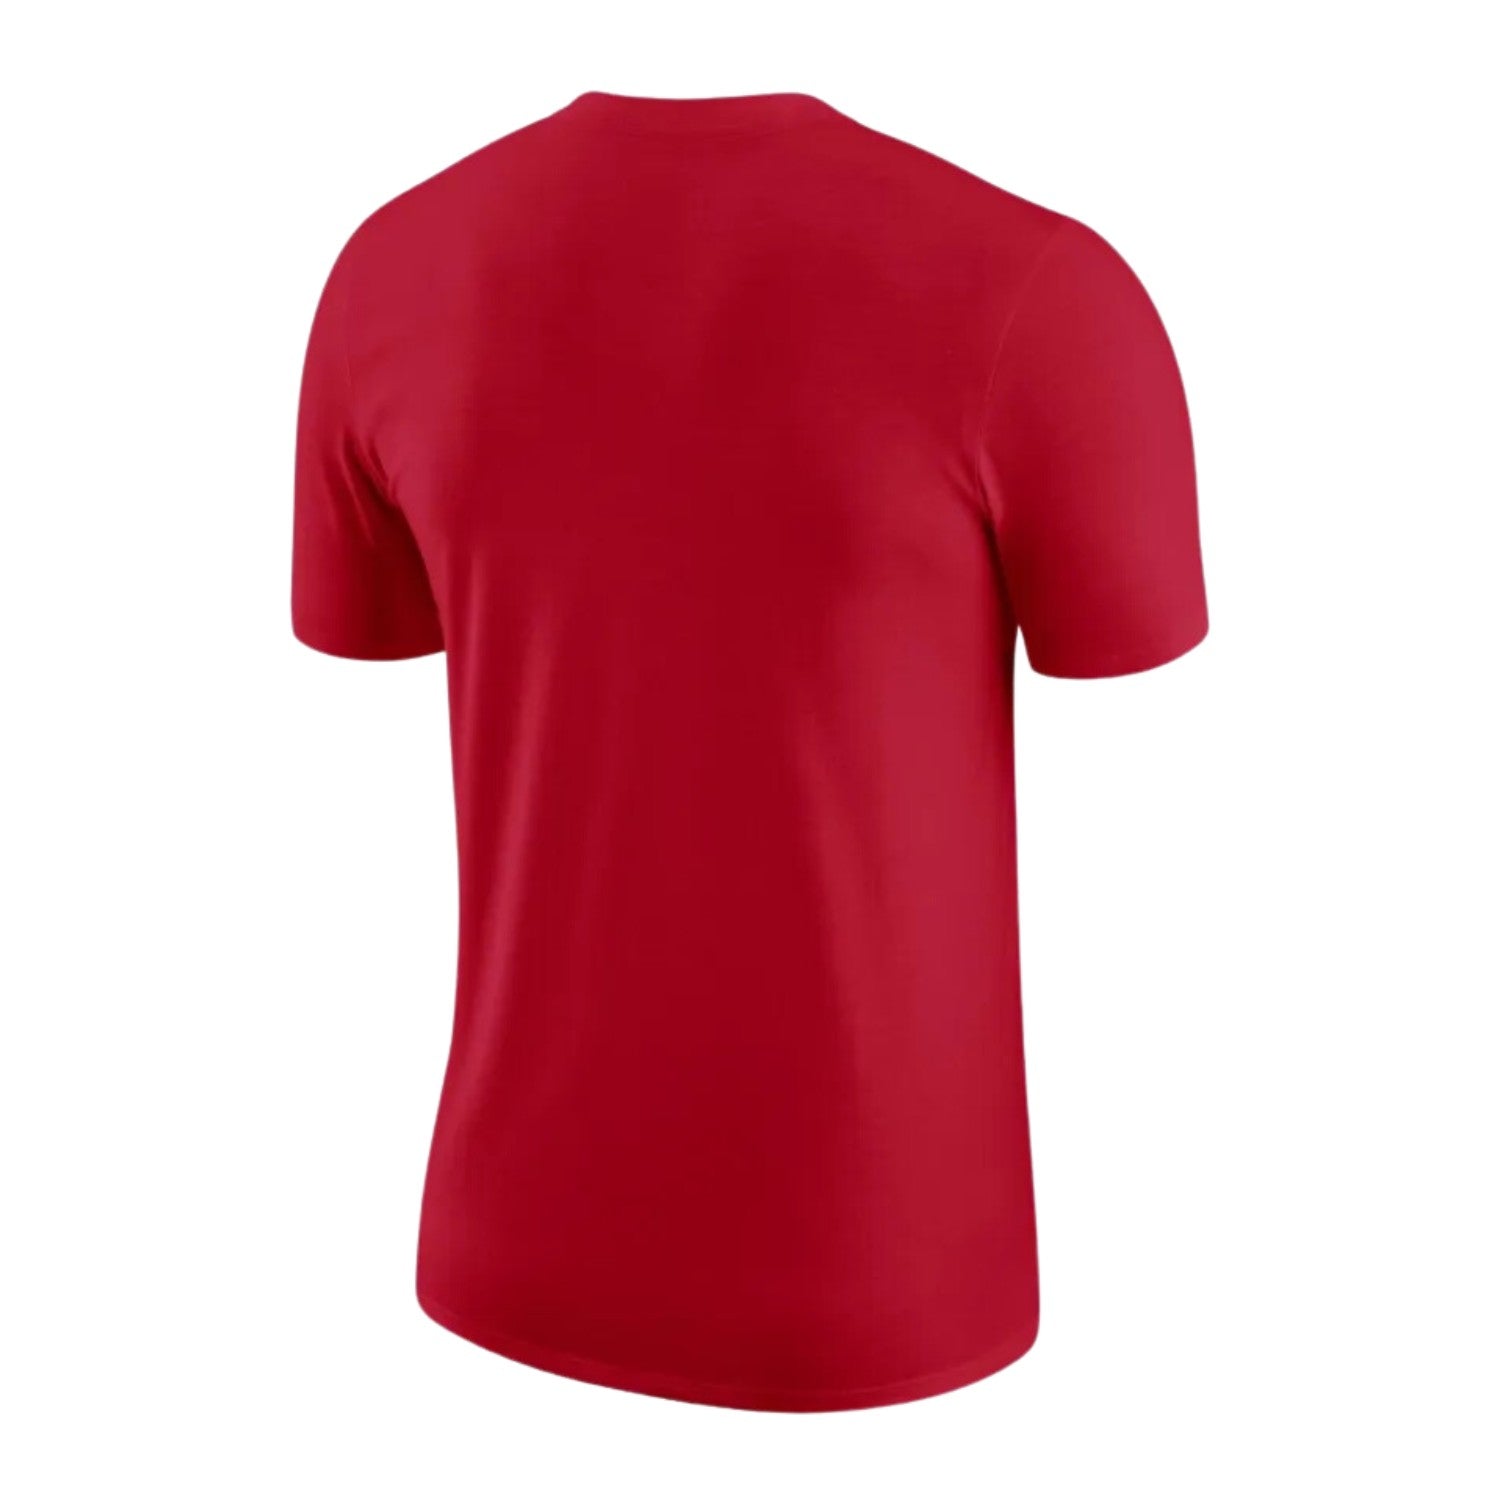 Nike Chicago Bulls Essential Men's  Nba T-shirt Mens Style : Fj0231